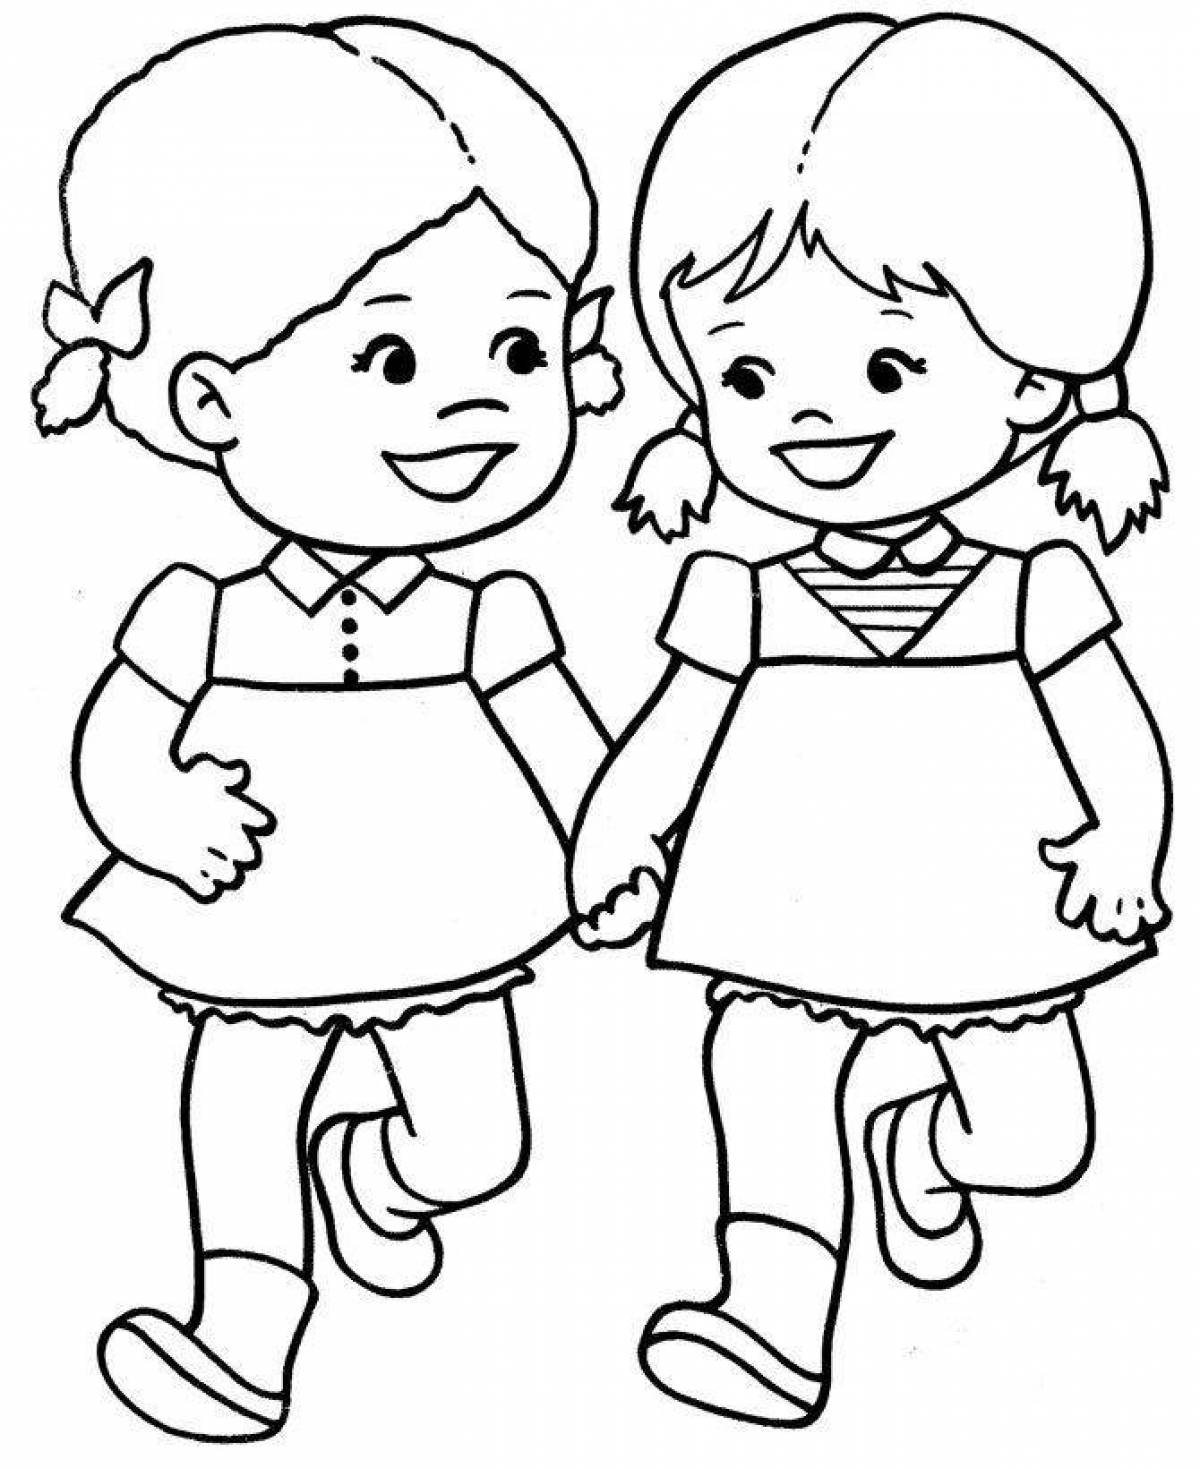 Children's friendship coloring book